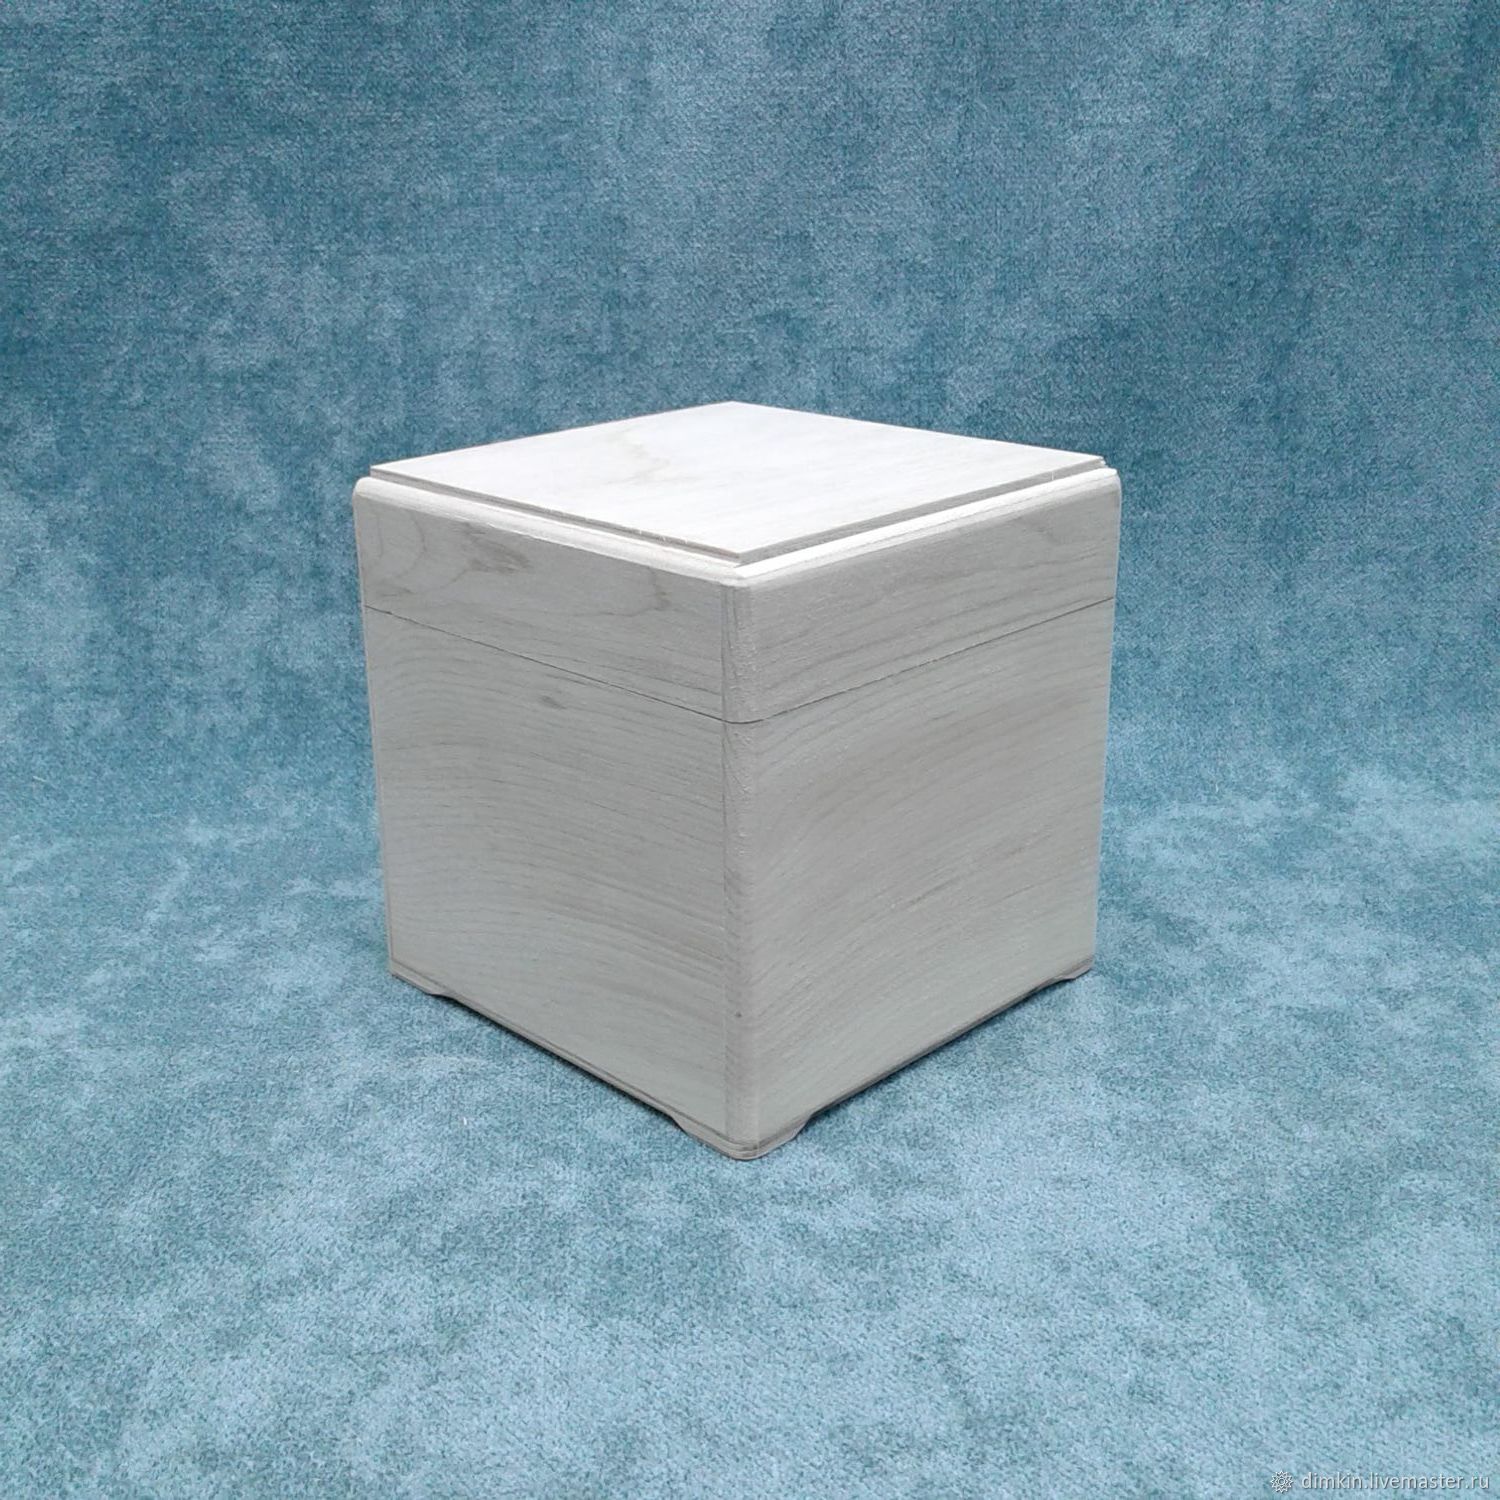 Cube шкатулка. Деревянный куб шкатулка. Куб со скругленными гранями. Шкатулка куб из дерева. Шкатулка кубик из дерева.